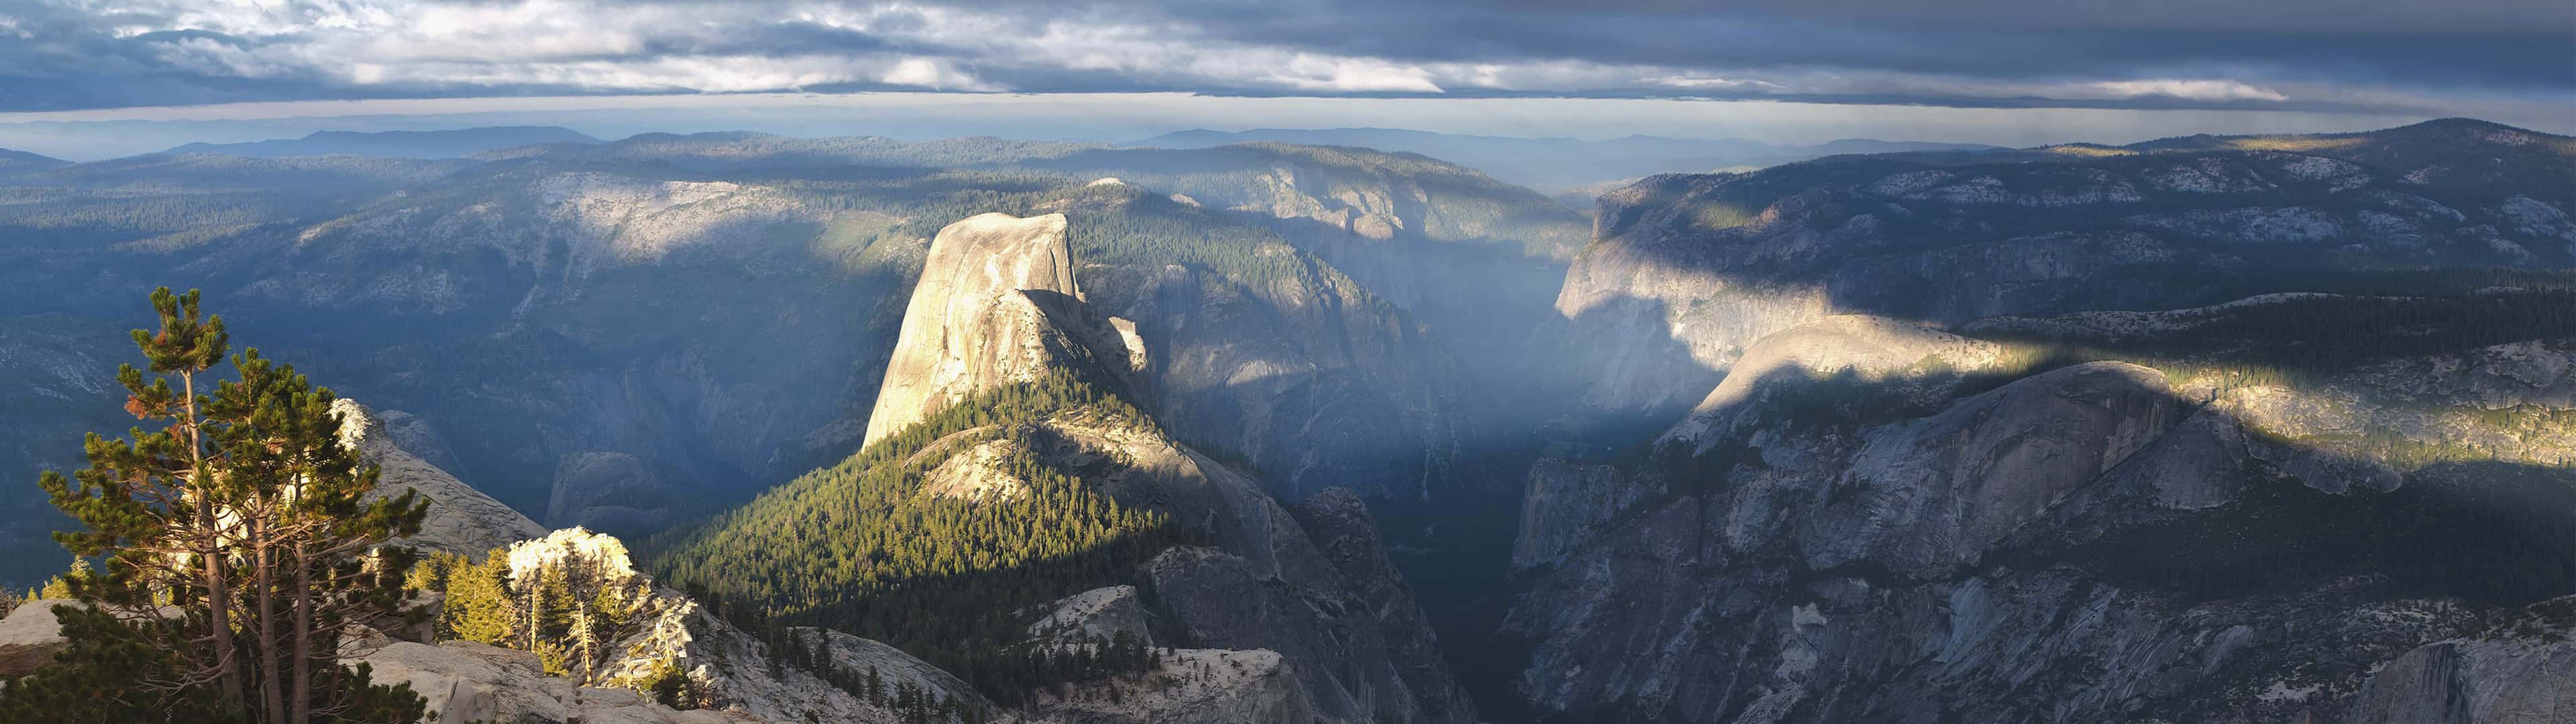 Yosemite Clouds Rest Mountain California United States Dual